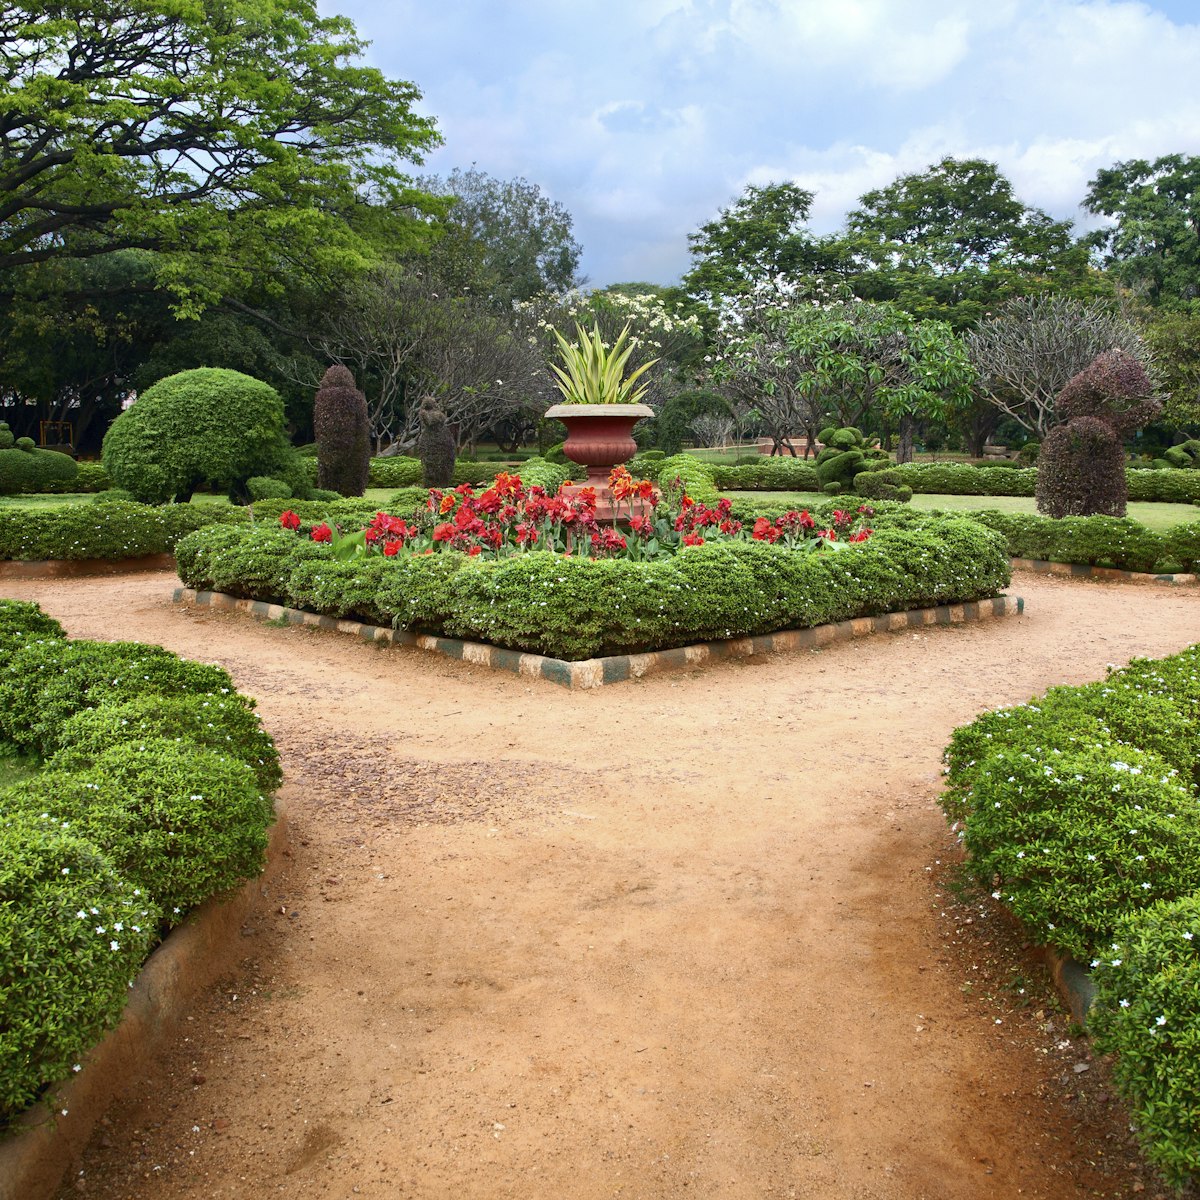 Lalbagh botanical garden in Bangalore